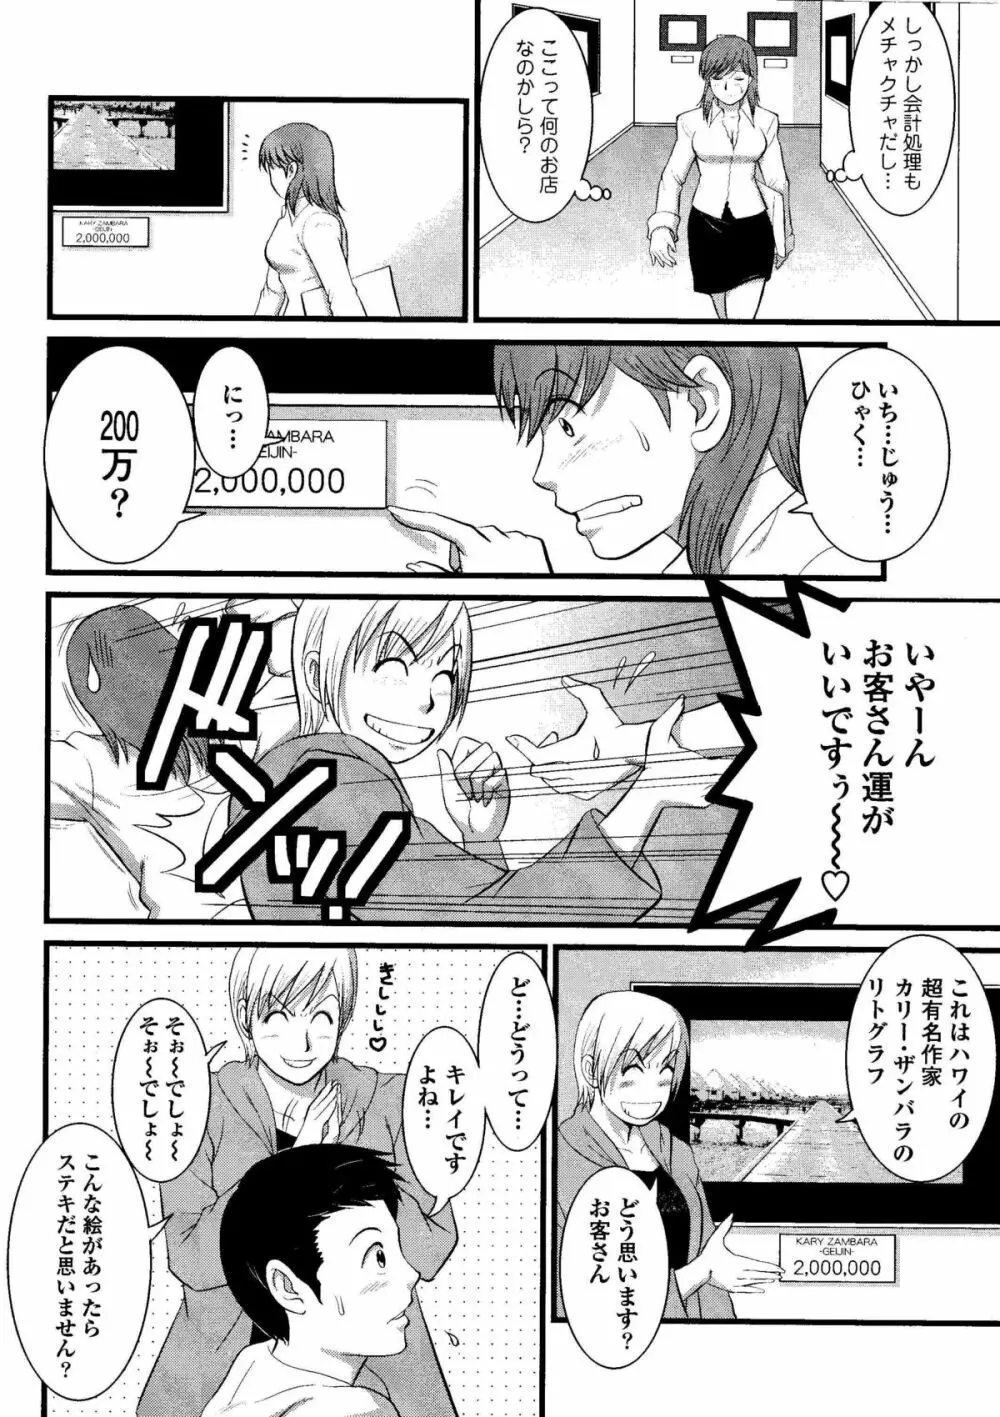 Haken no Muuko-san 8 7ページ